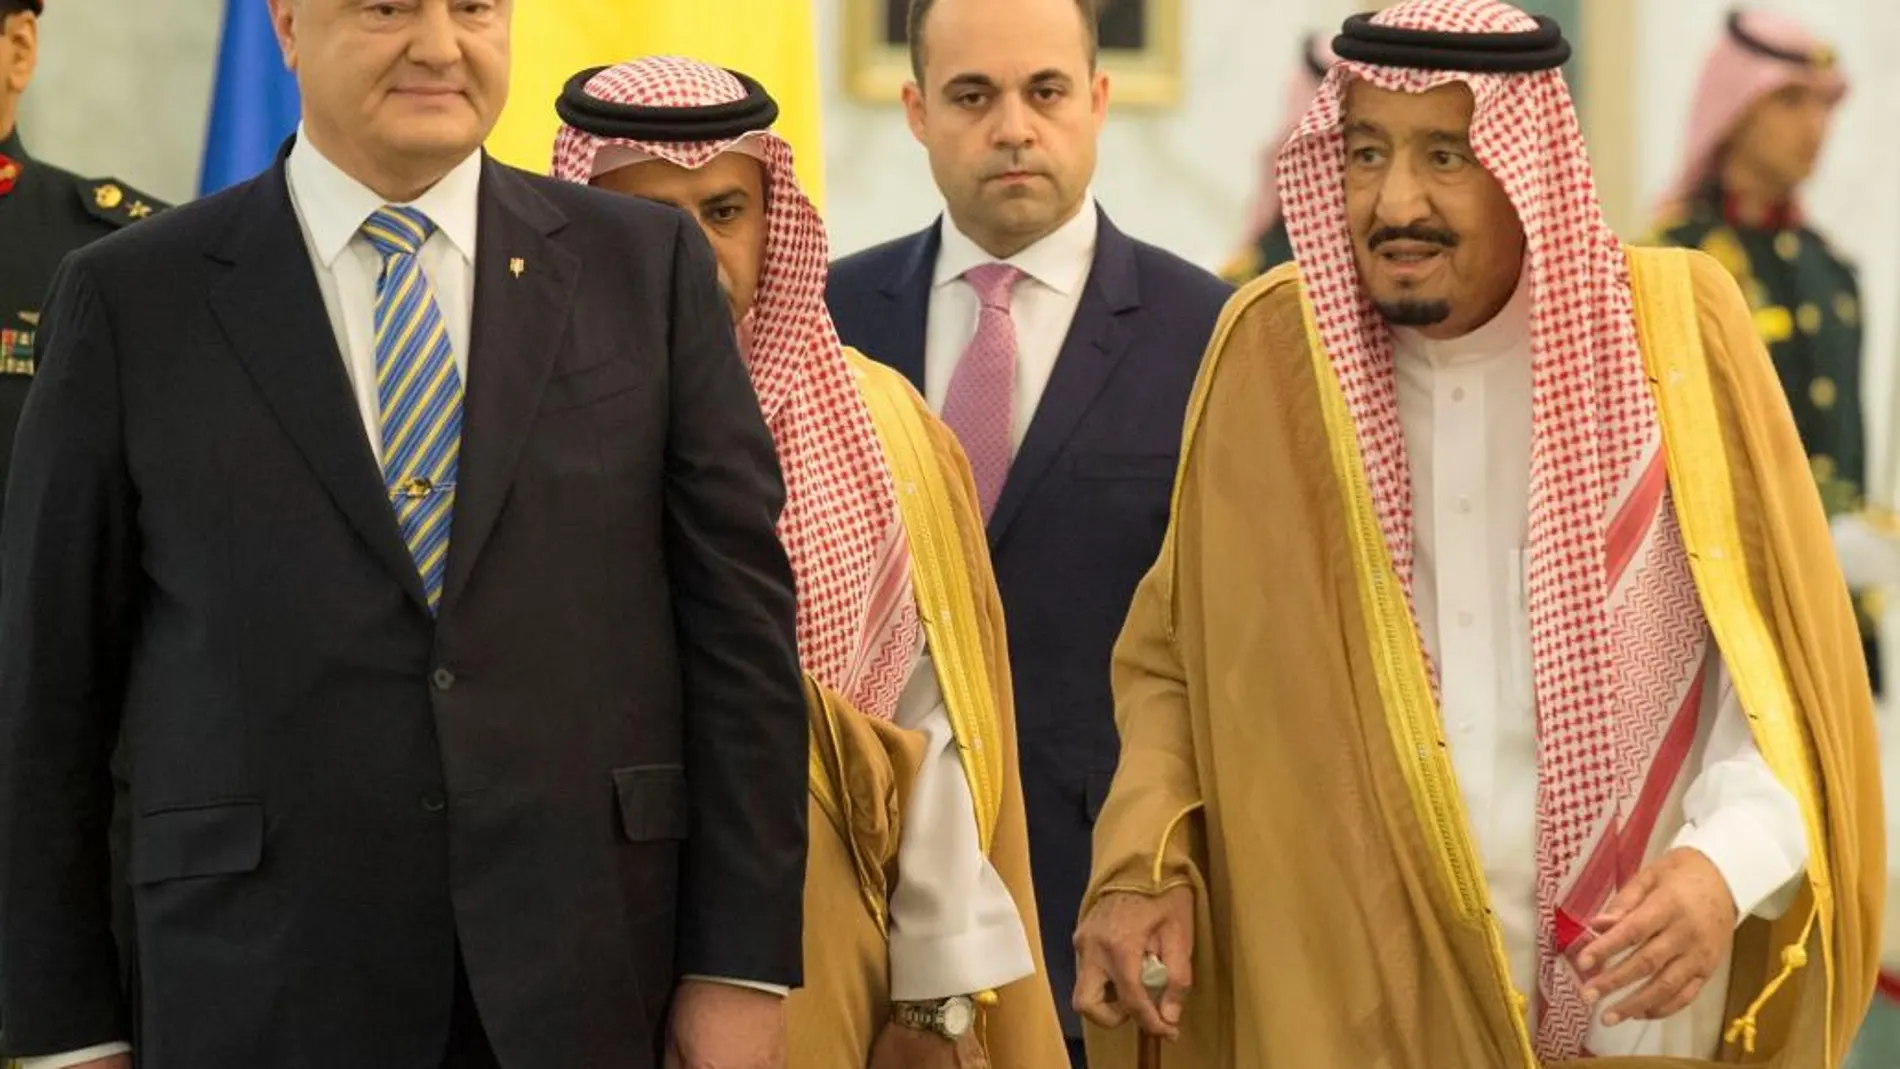 El rey de Arabia Saudí Salman bin Abdulaziz Al Saud